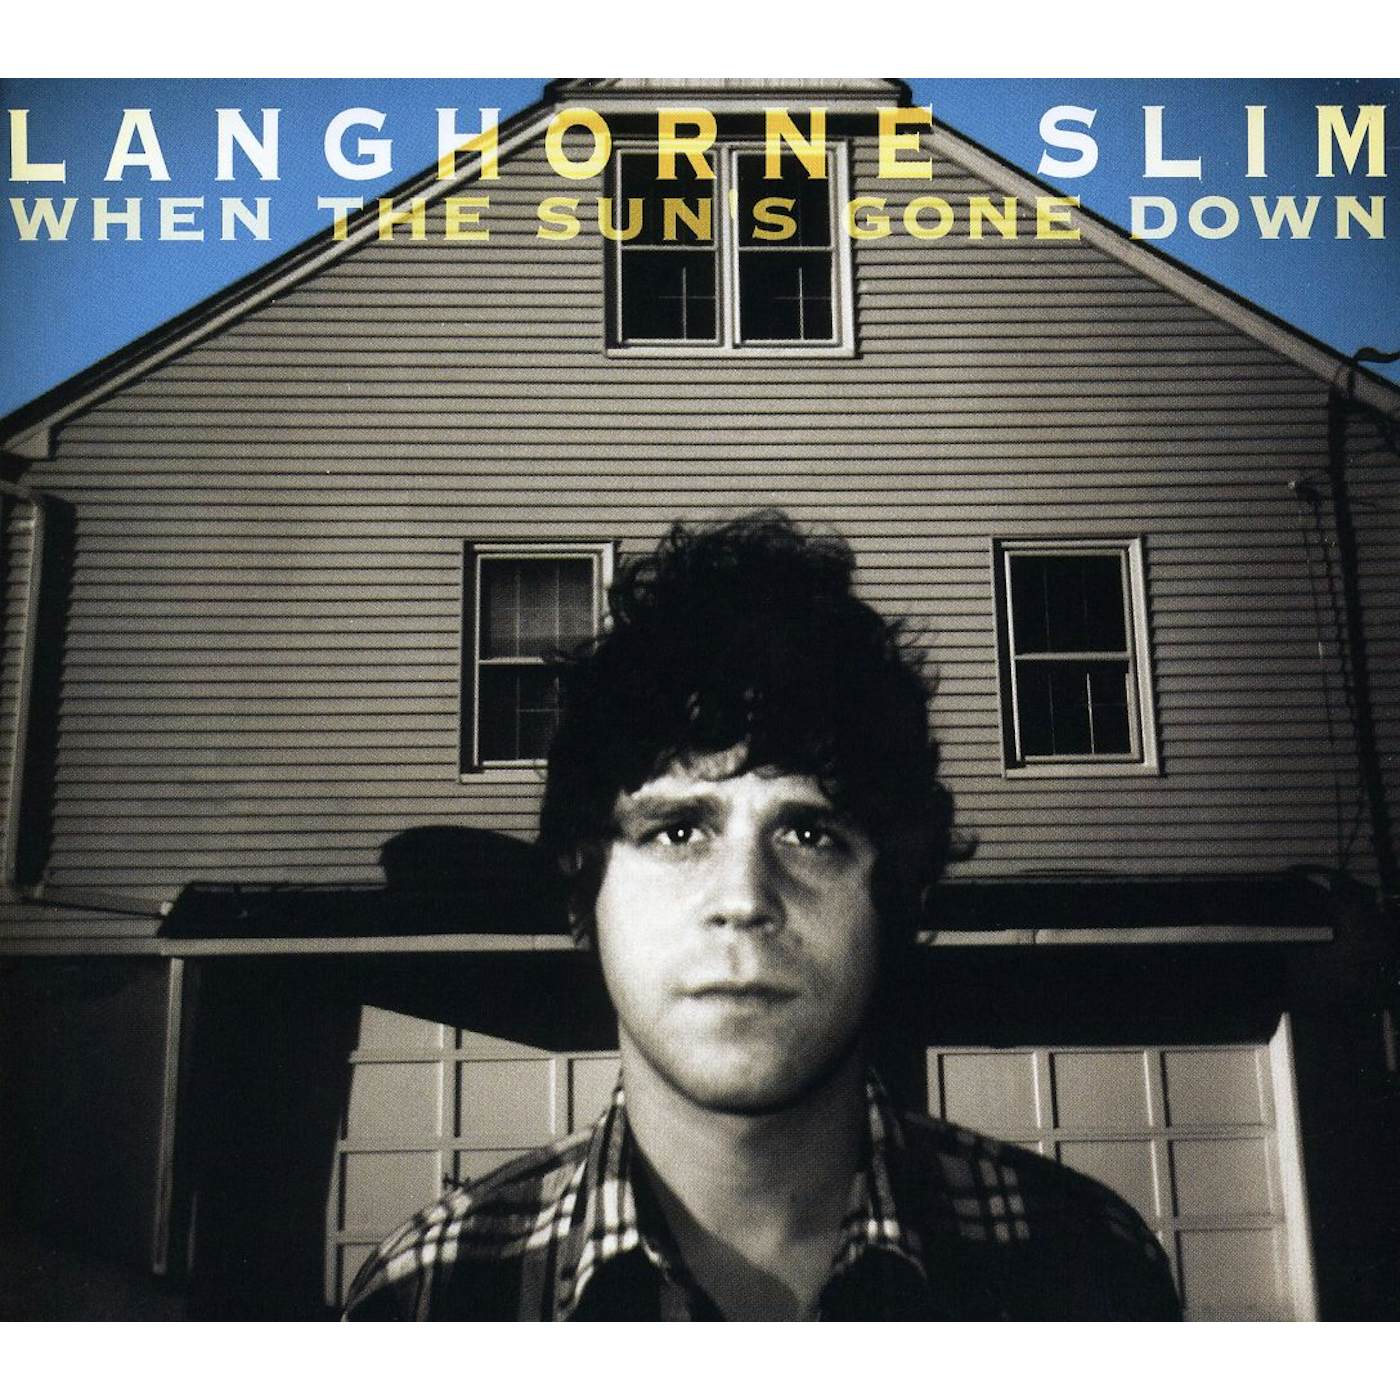 Langhorne Slim WHEN THE SUN'S GONE DOWN CD